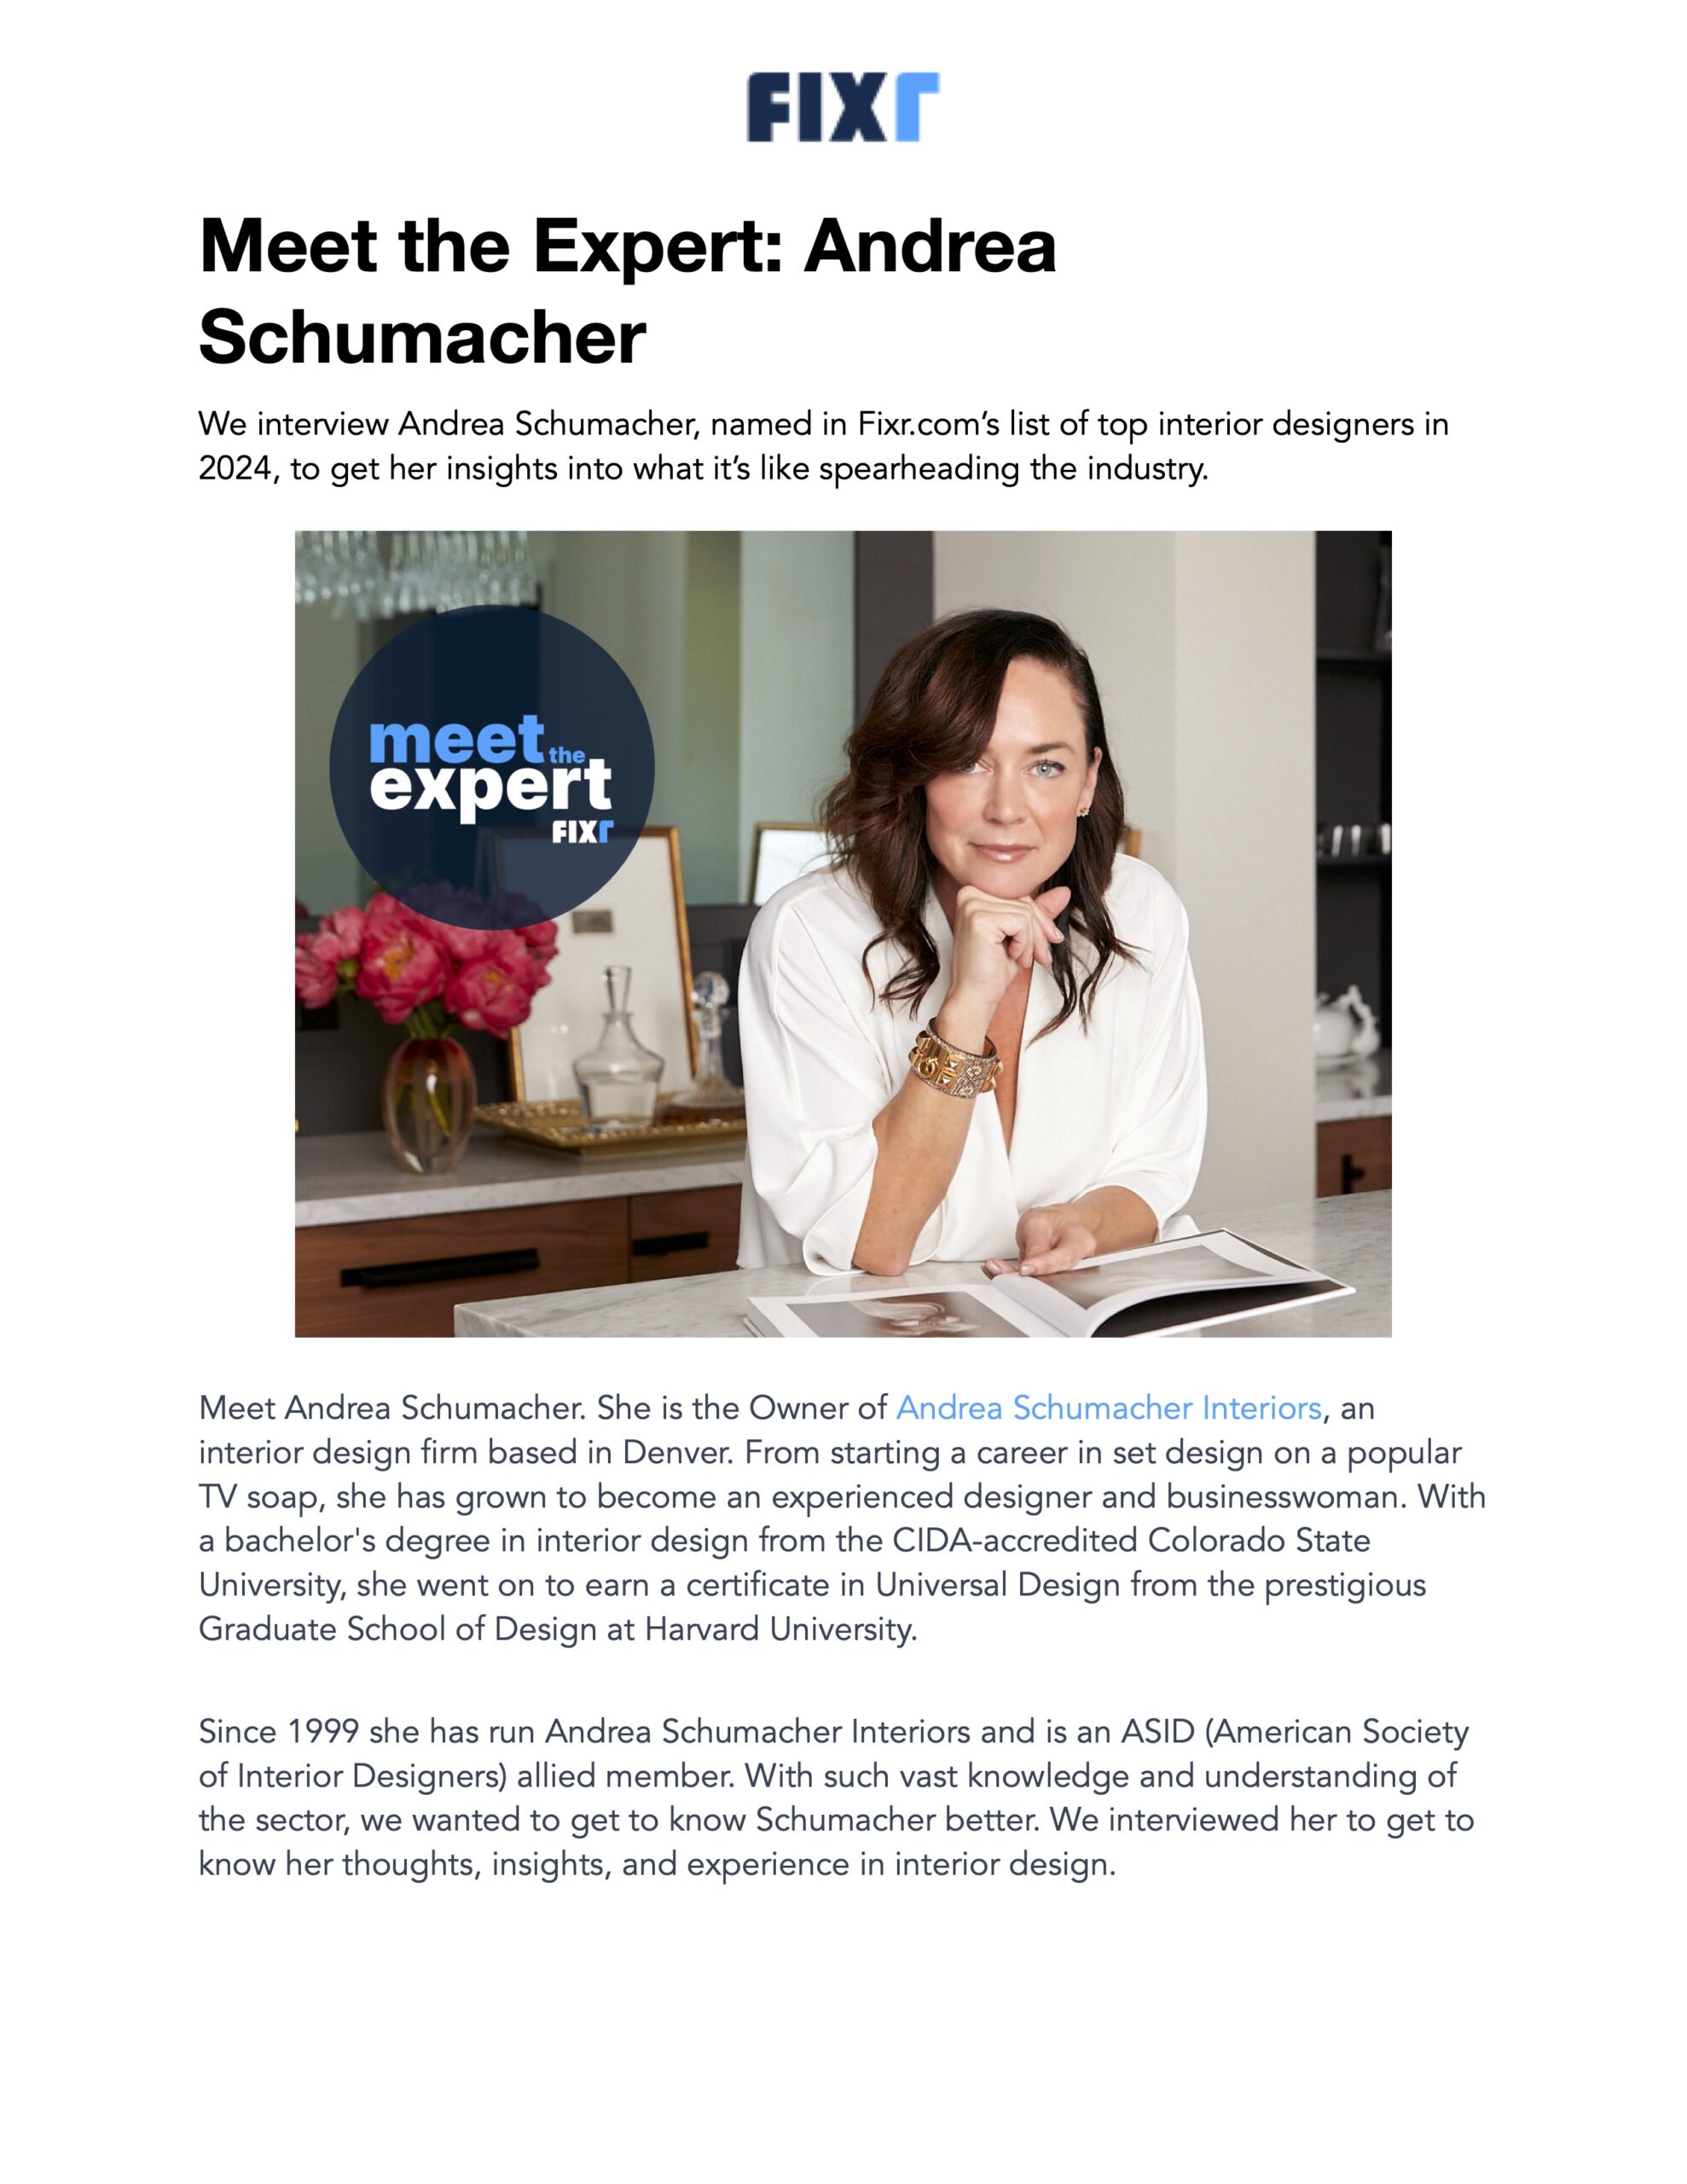 Andrea Schumacher Interiors article cover